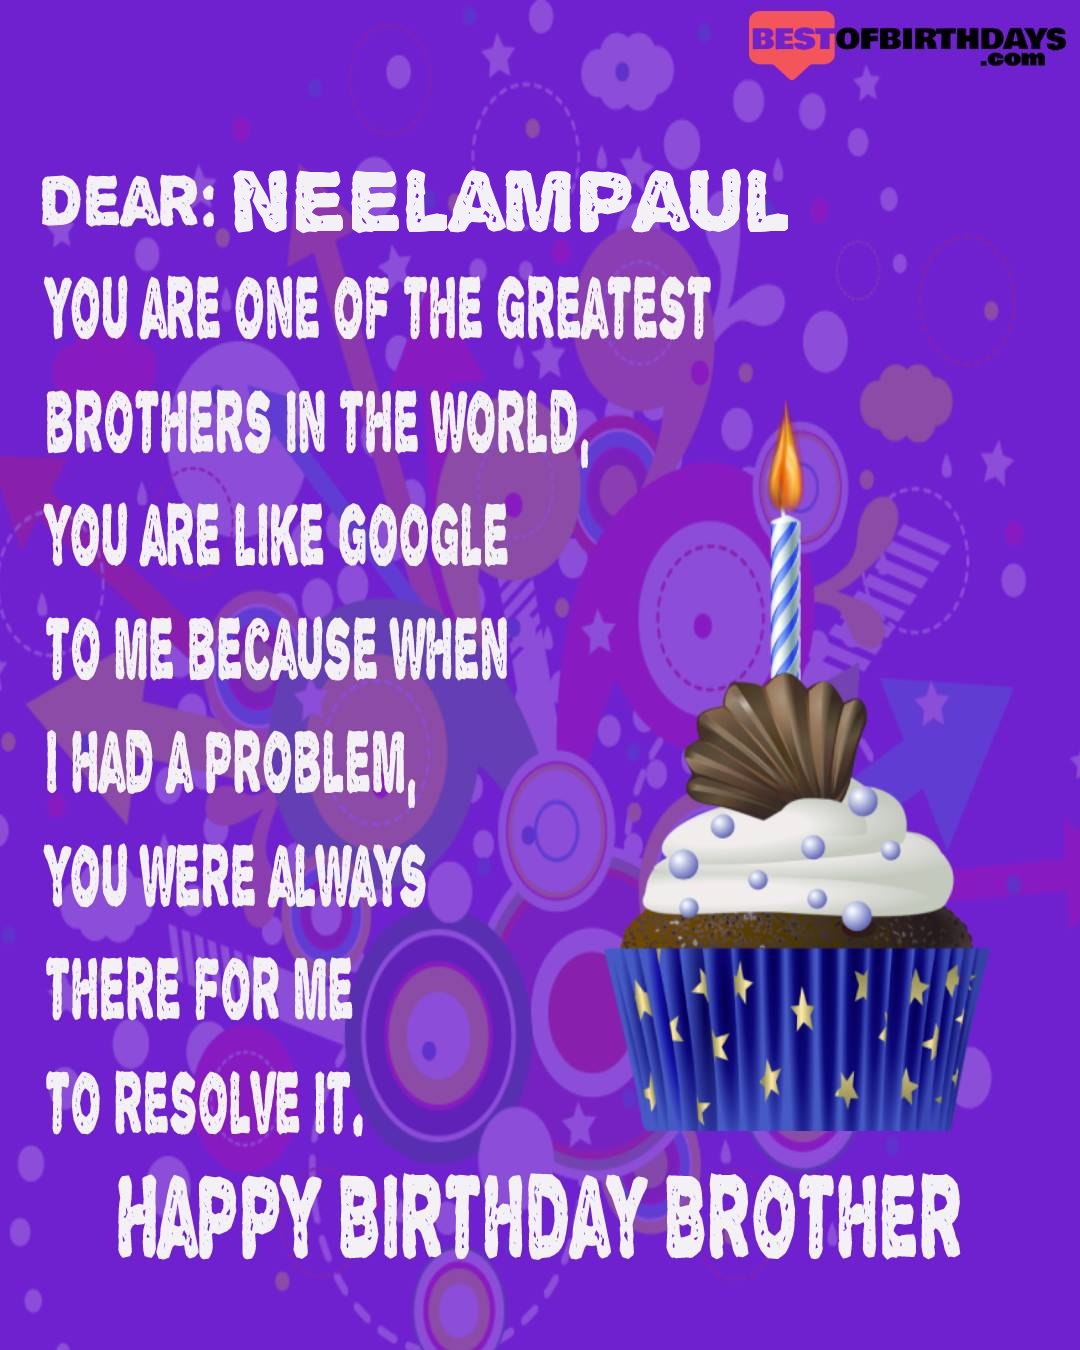 Happy birthday neelampaul bhai brother bro